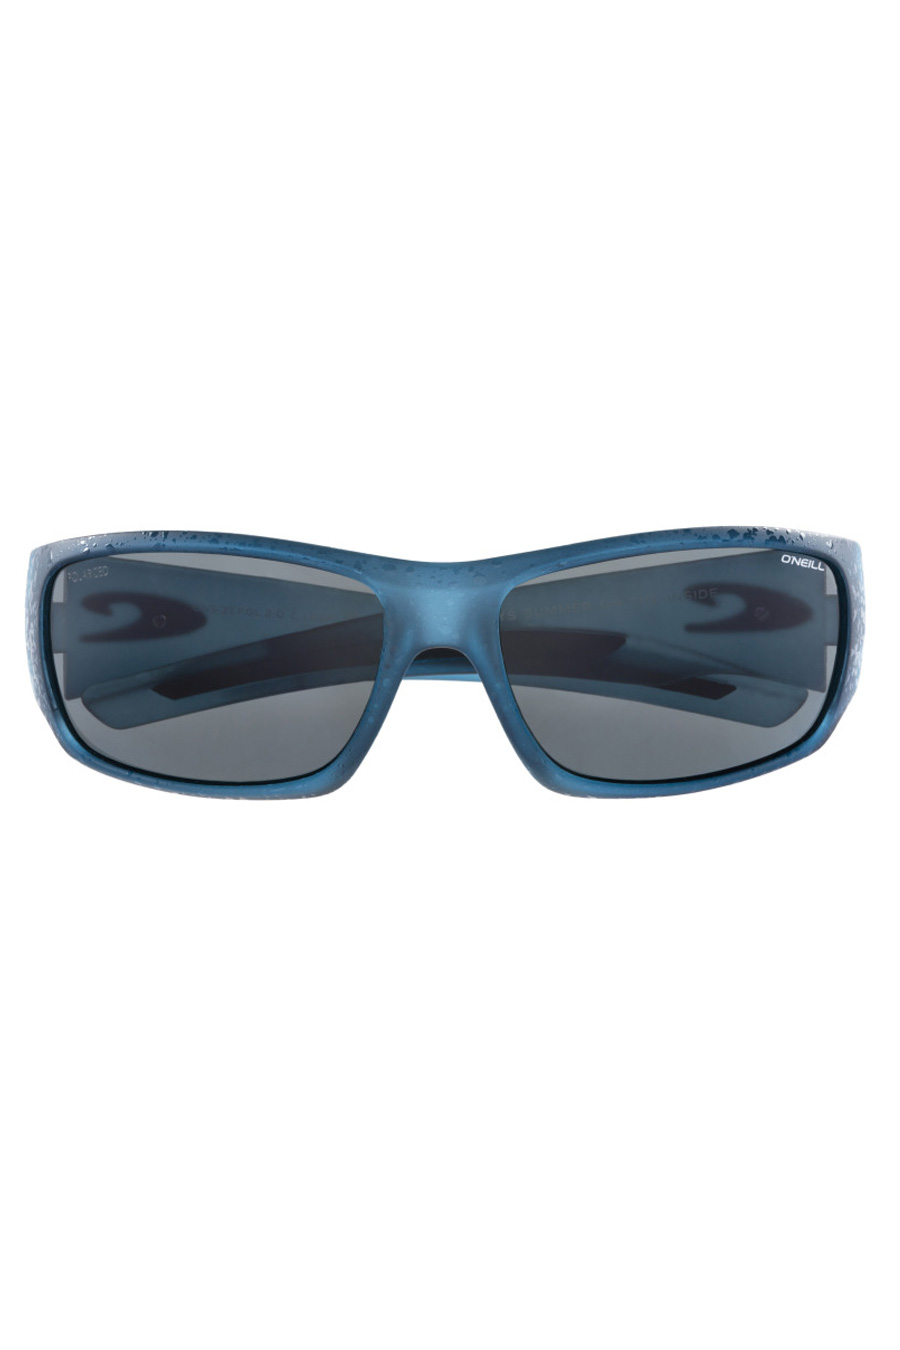 Sunglasses ONEILL ONS-ZEPOL20-105P